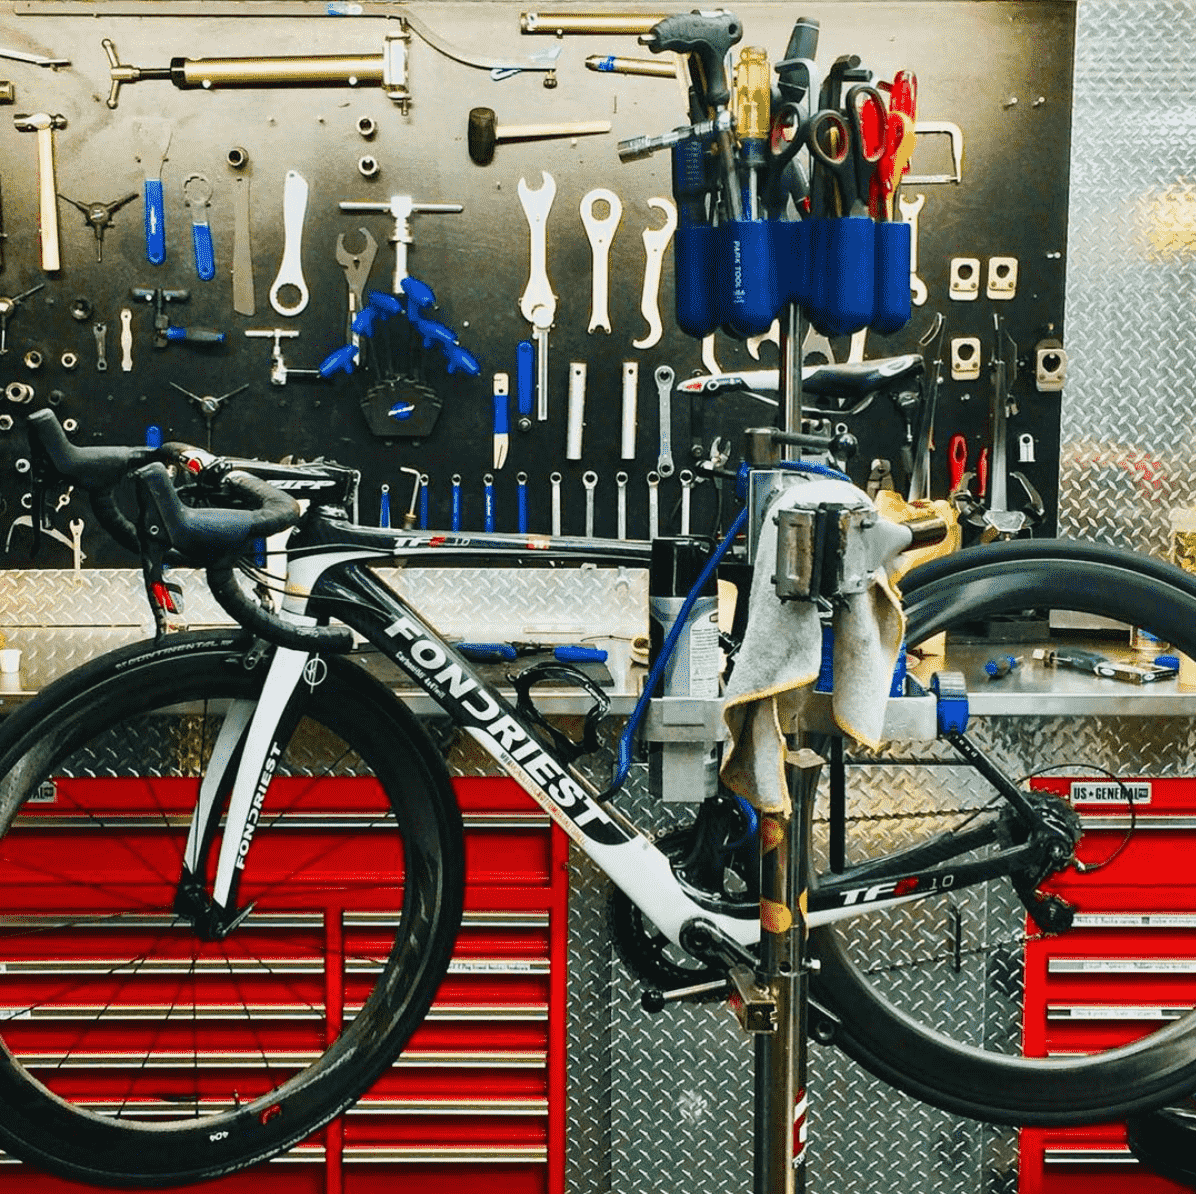 Bike Repair Services in Miami